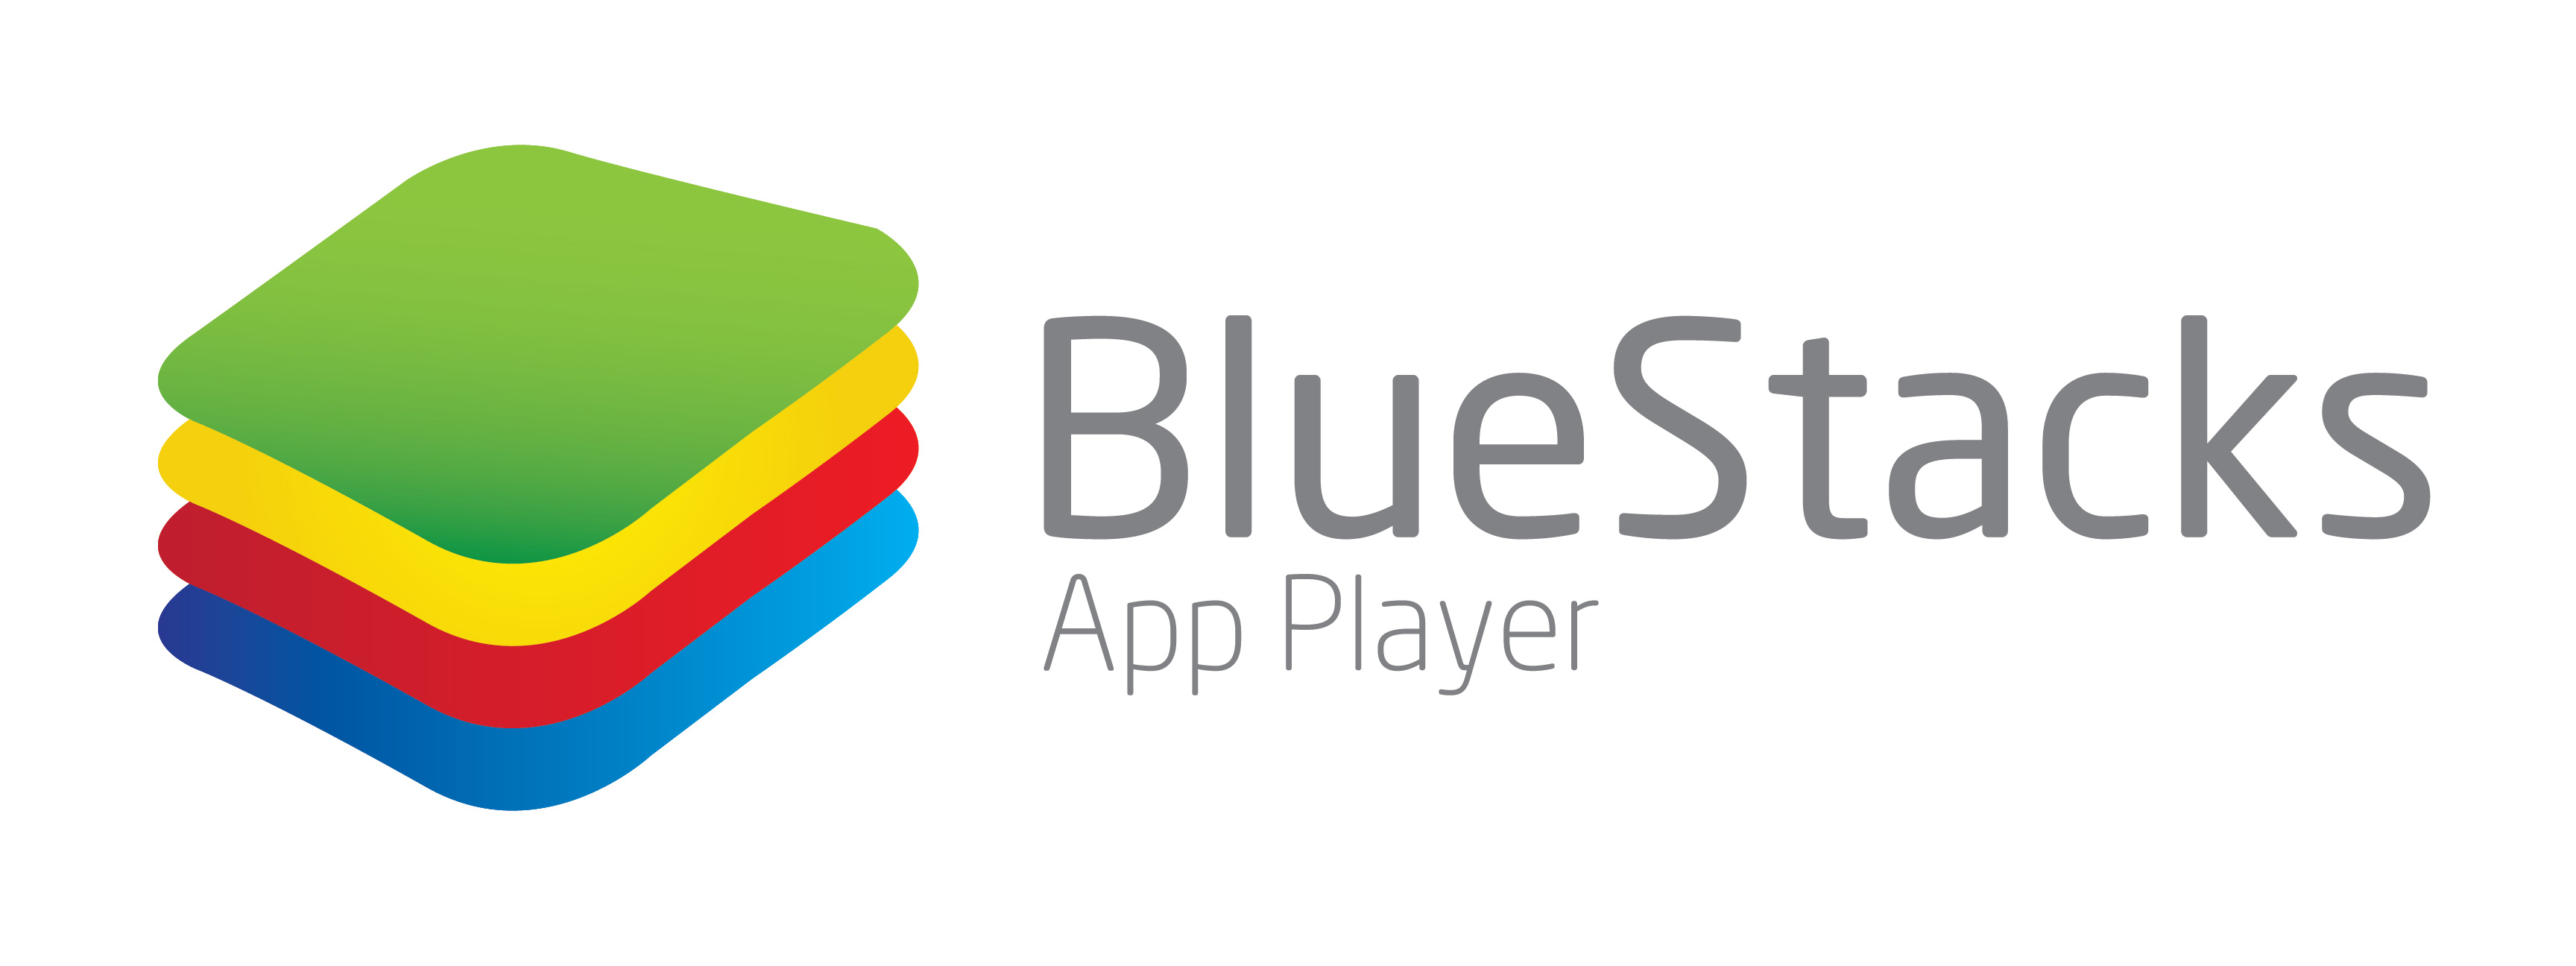 bluestacks-new-logo-big.jpg